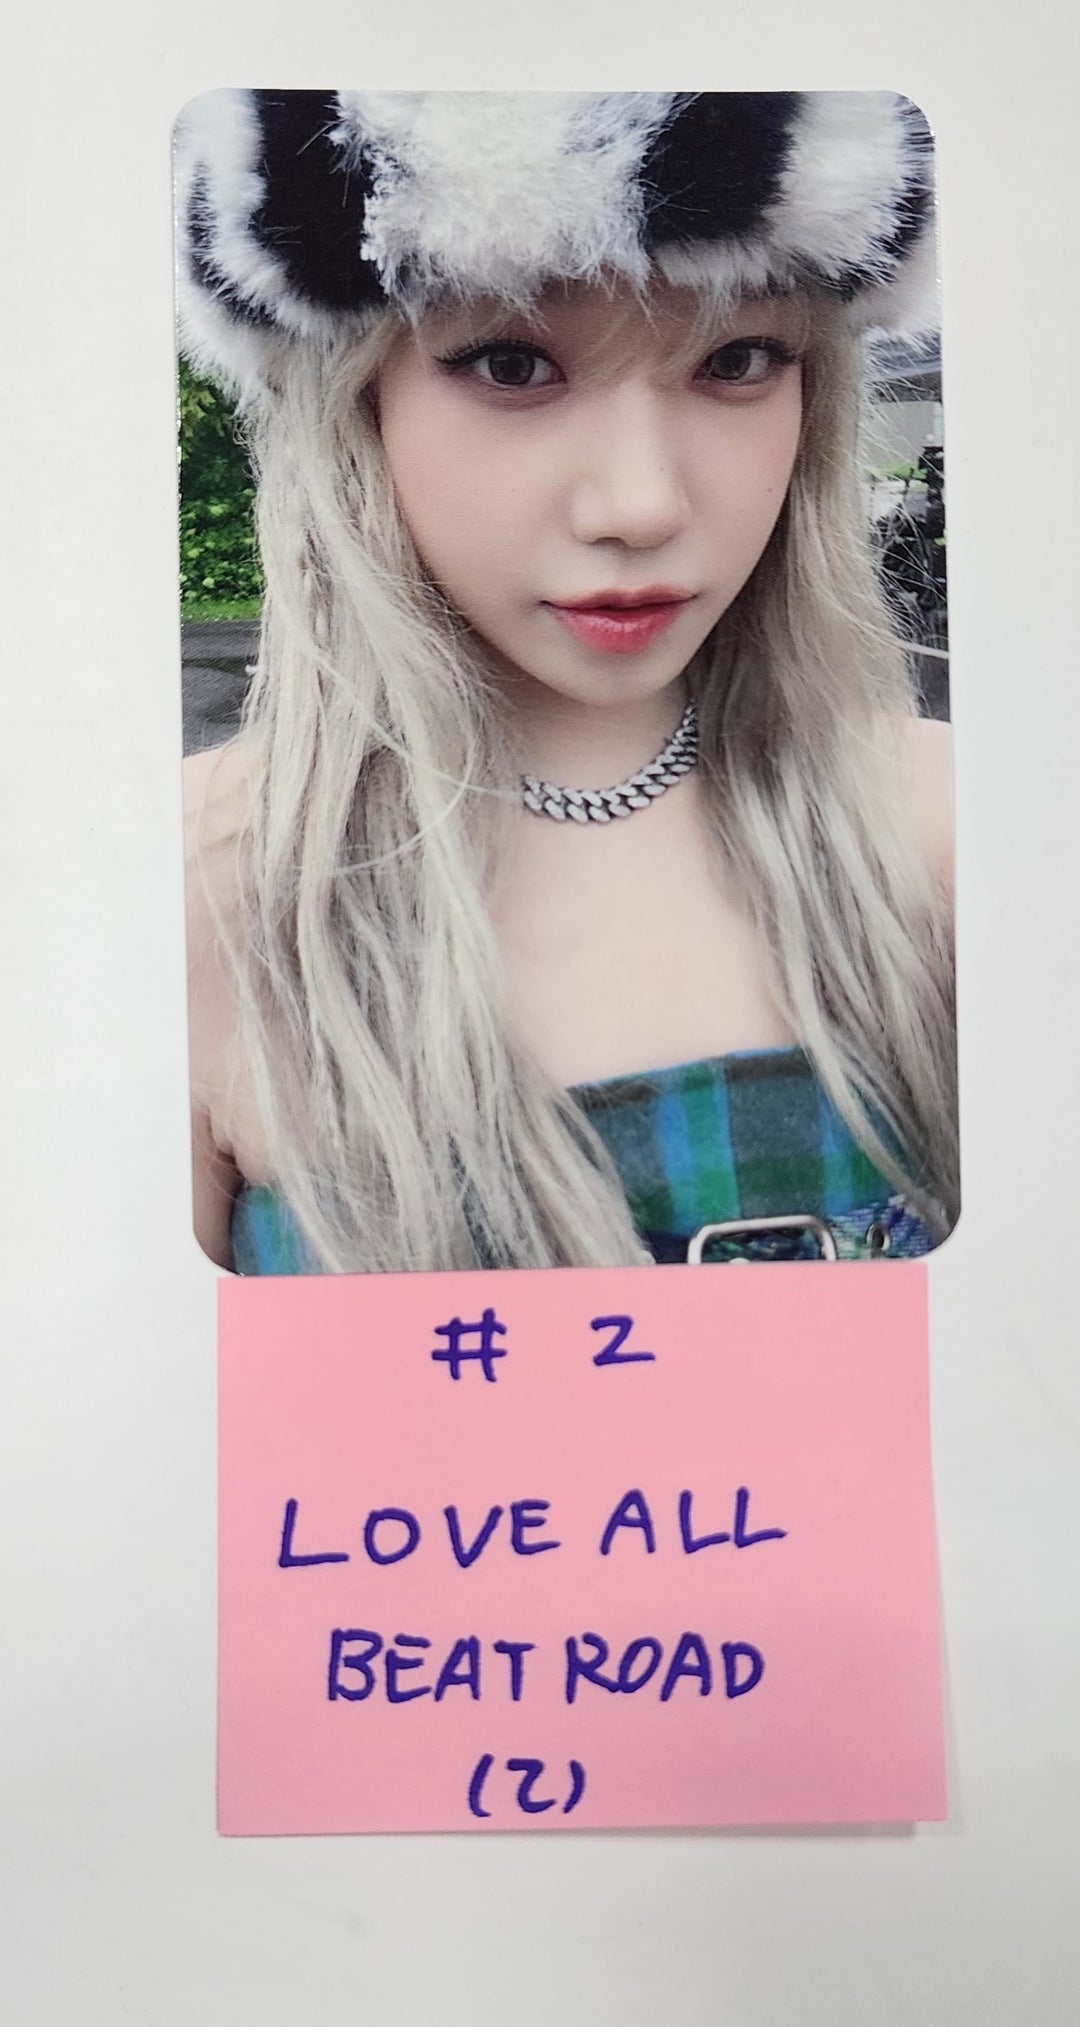 JO YURI "Love All" - Beatroad Fansign Event Photocard [23.08.29]